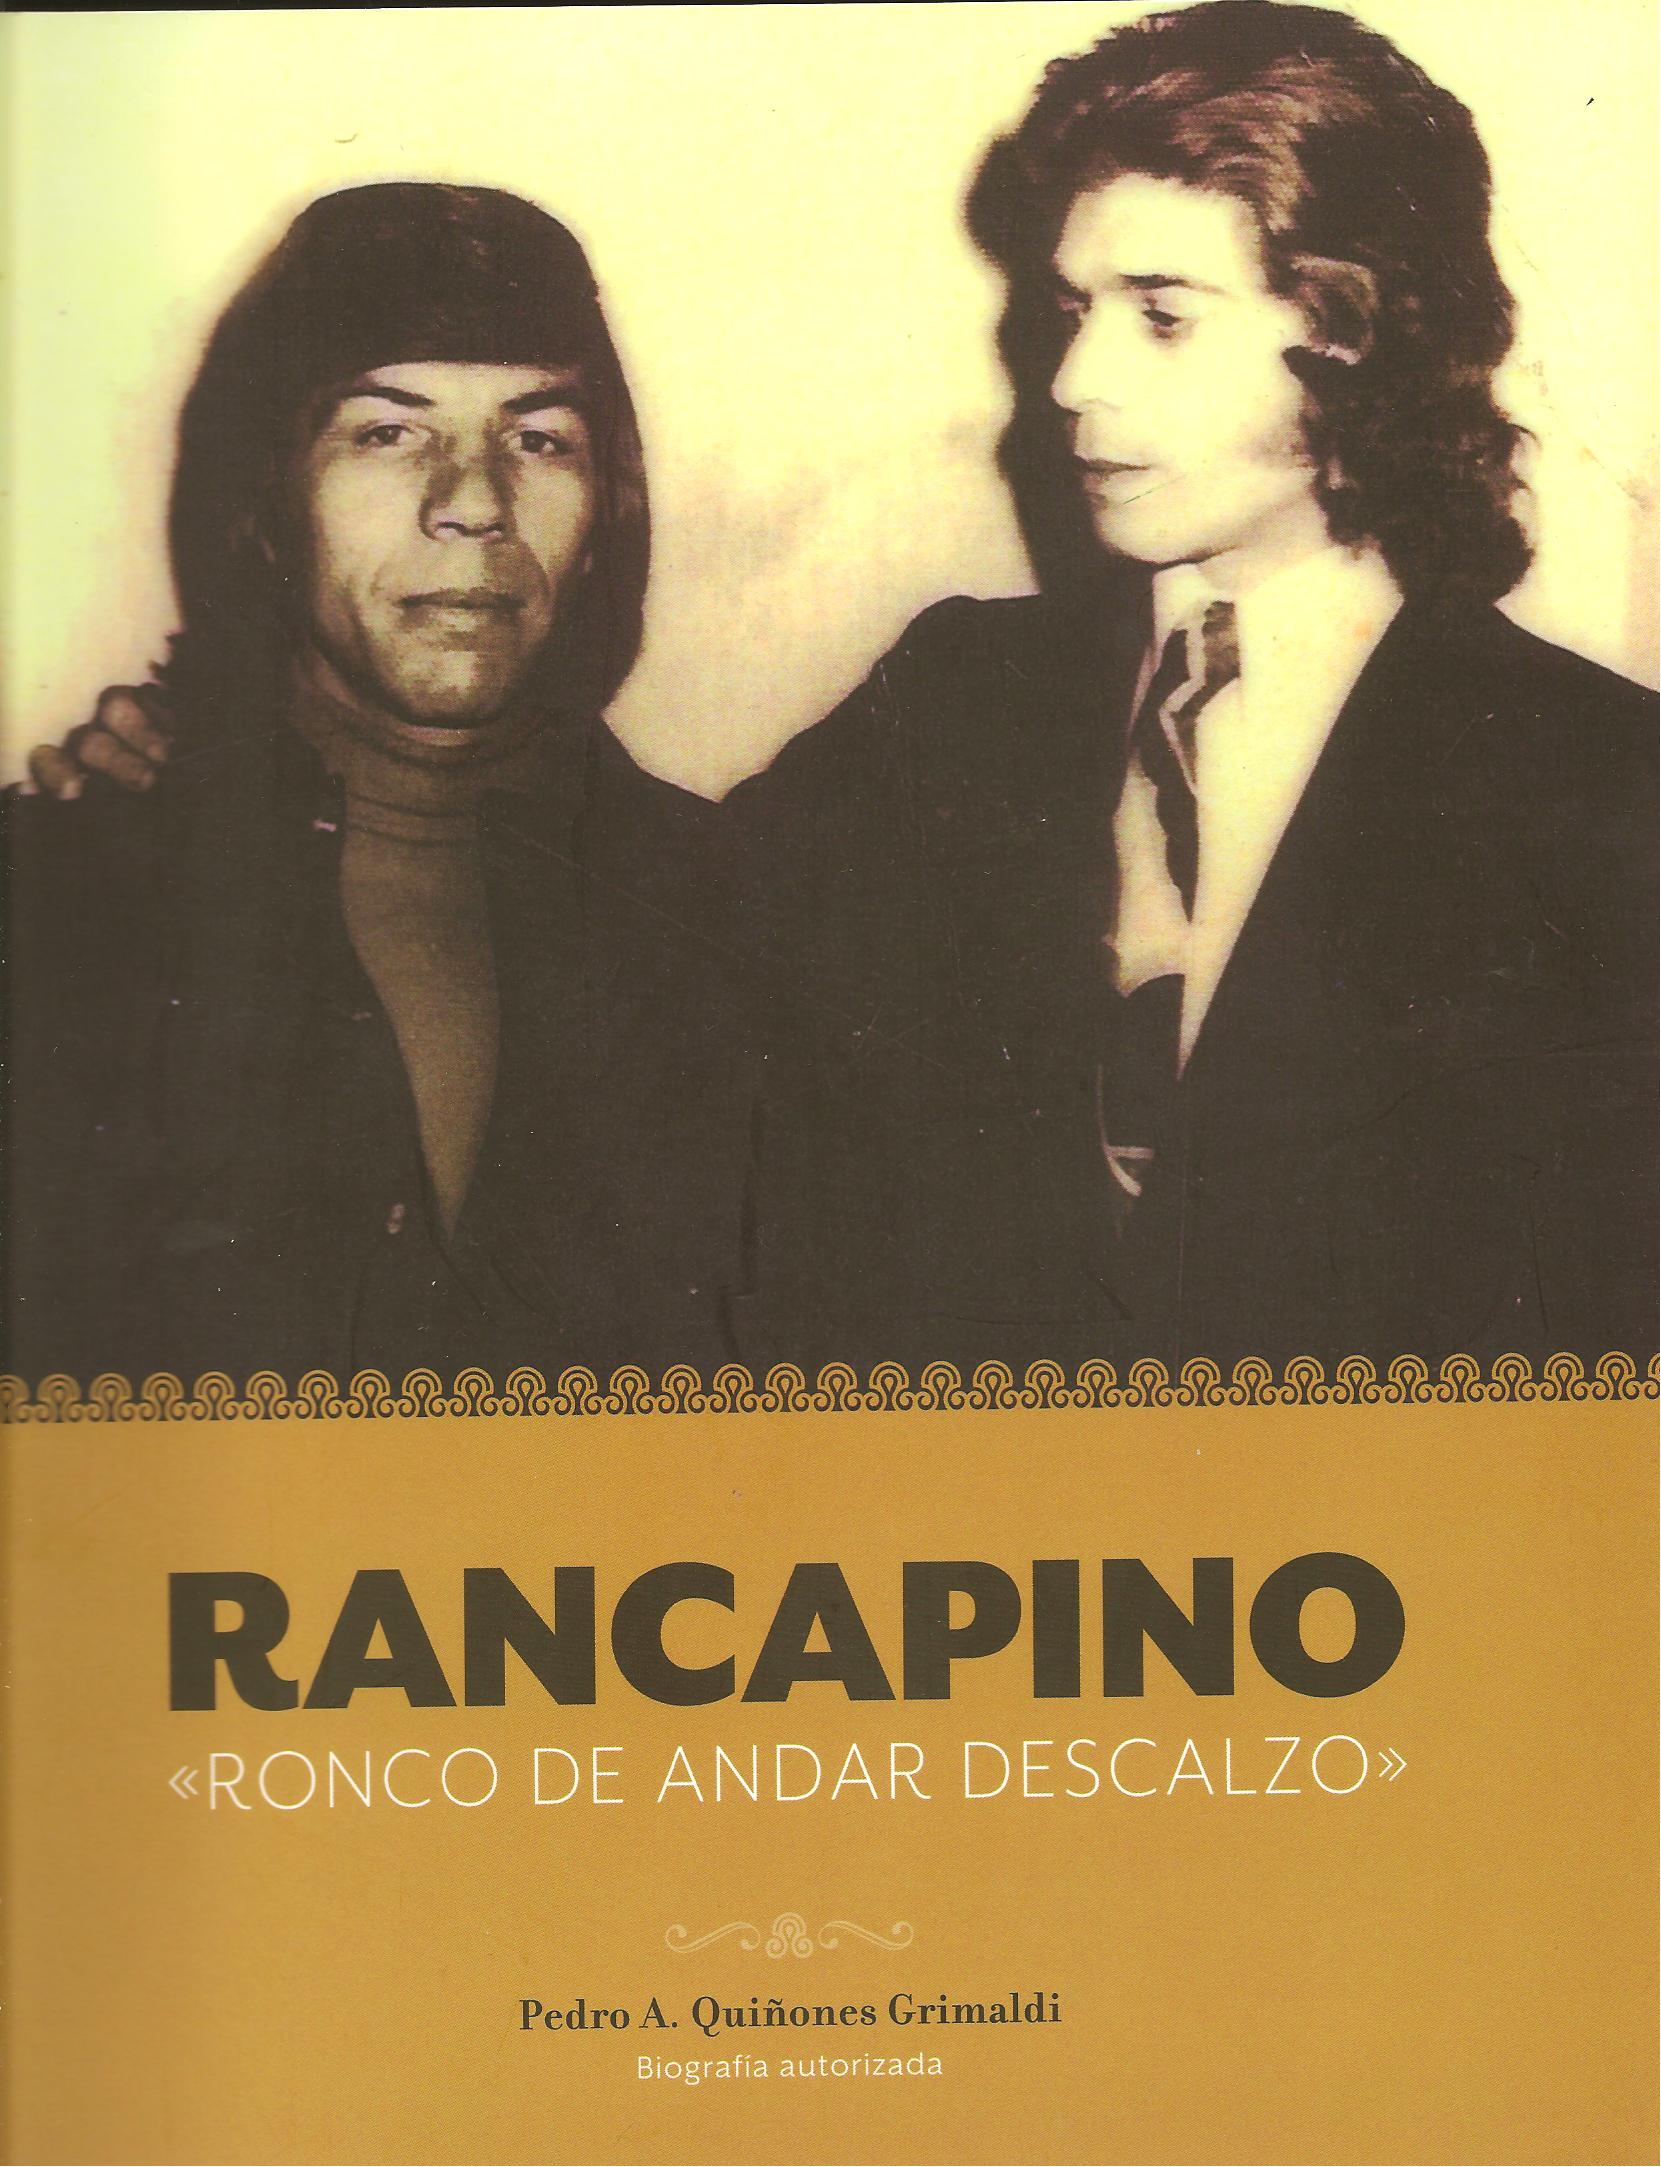 rancapino 001 - Rancapino; ronco de andar descalzo (Pedro A Quiñones Grimaldi) - (Audiolibro Voz Humana)